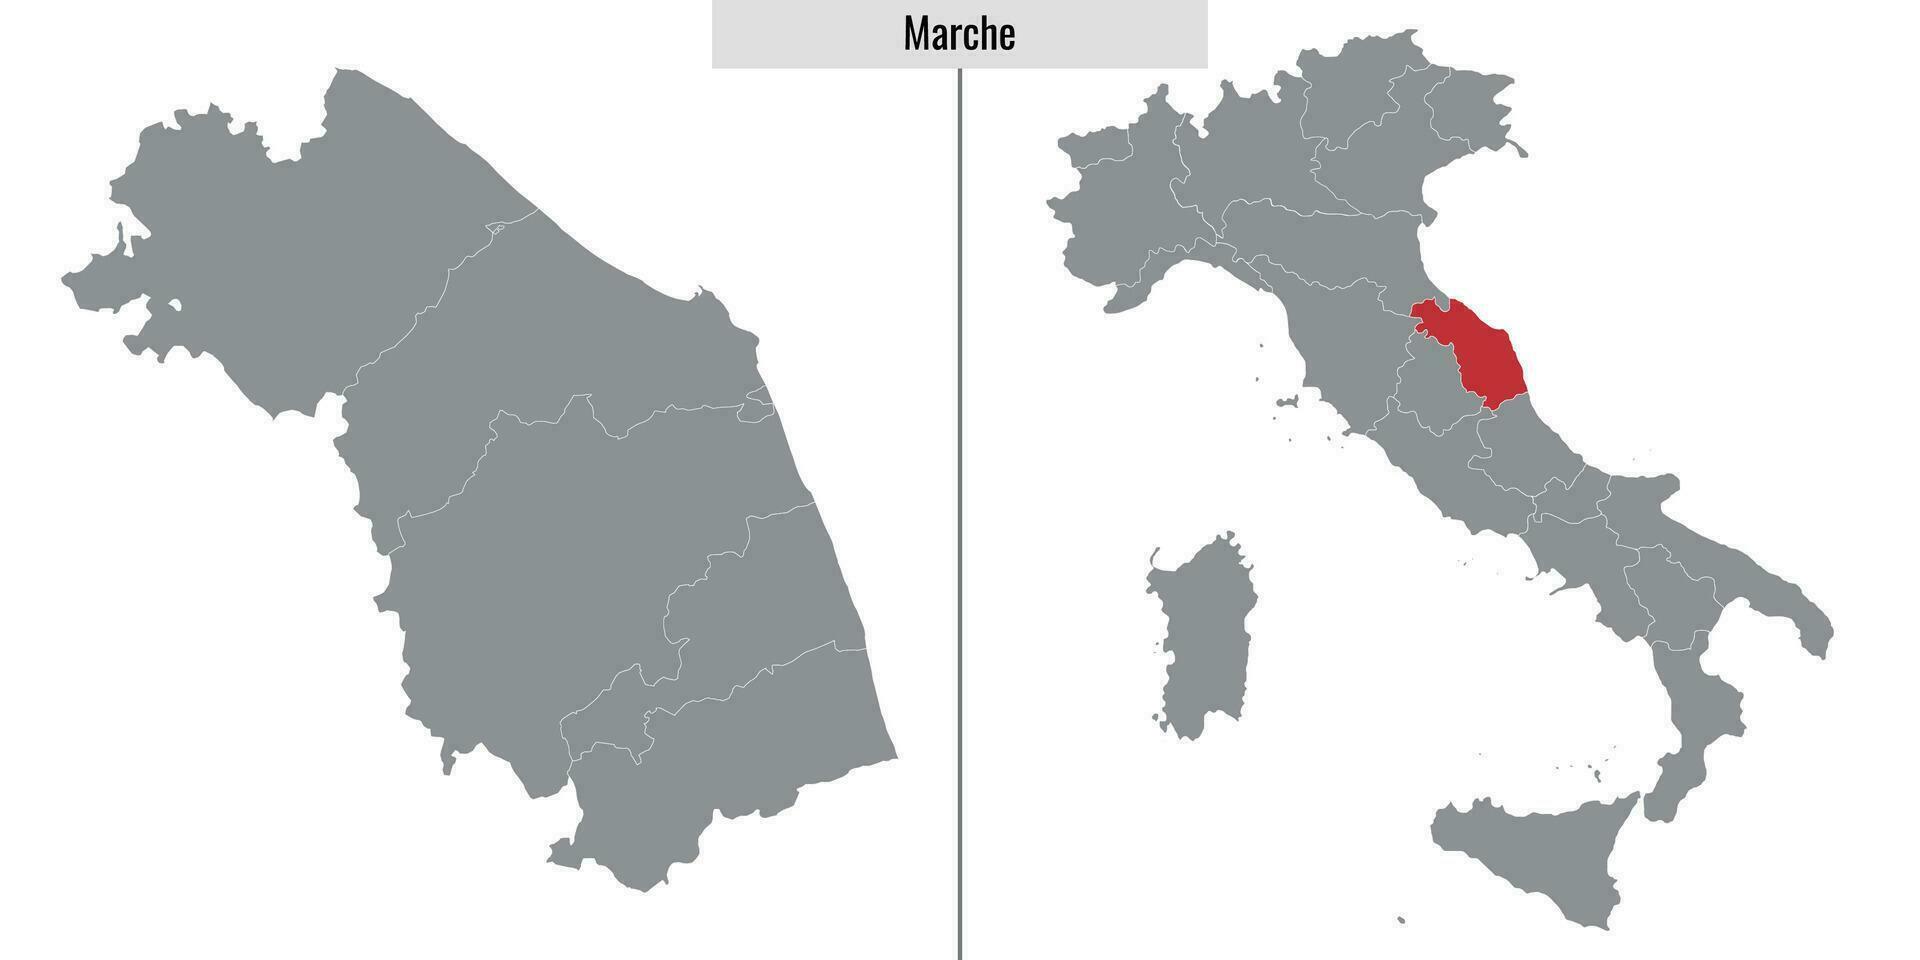 carte Province de Italie vecteur